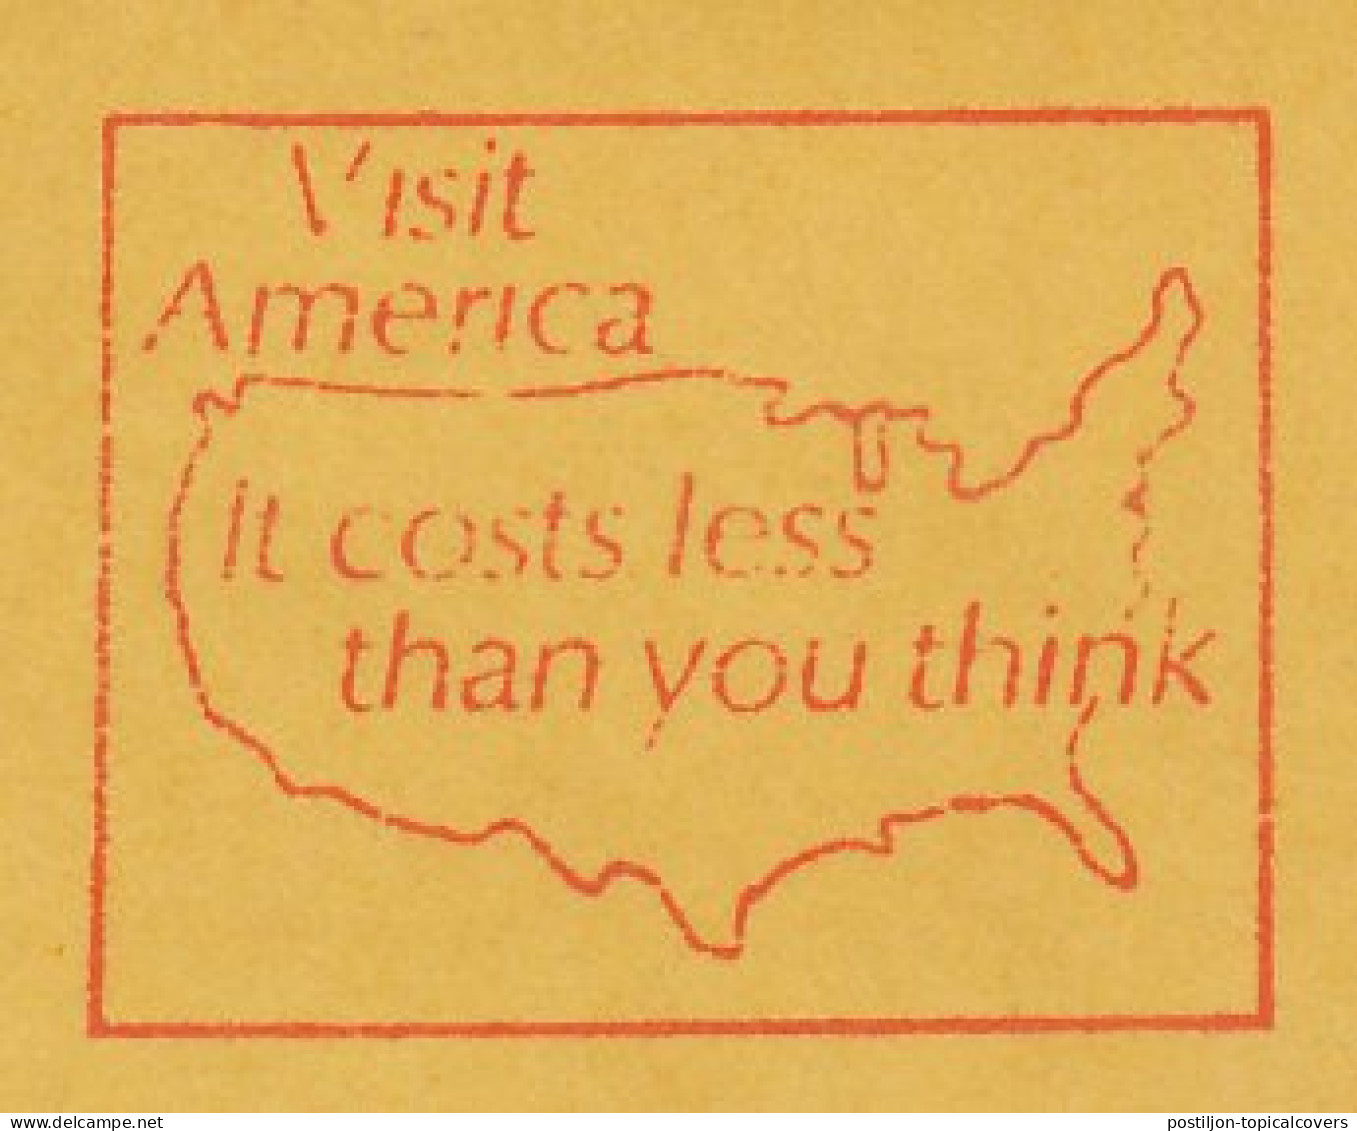 Meter Cut Netherlands 1978 Visit America - Map - Non Classificati